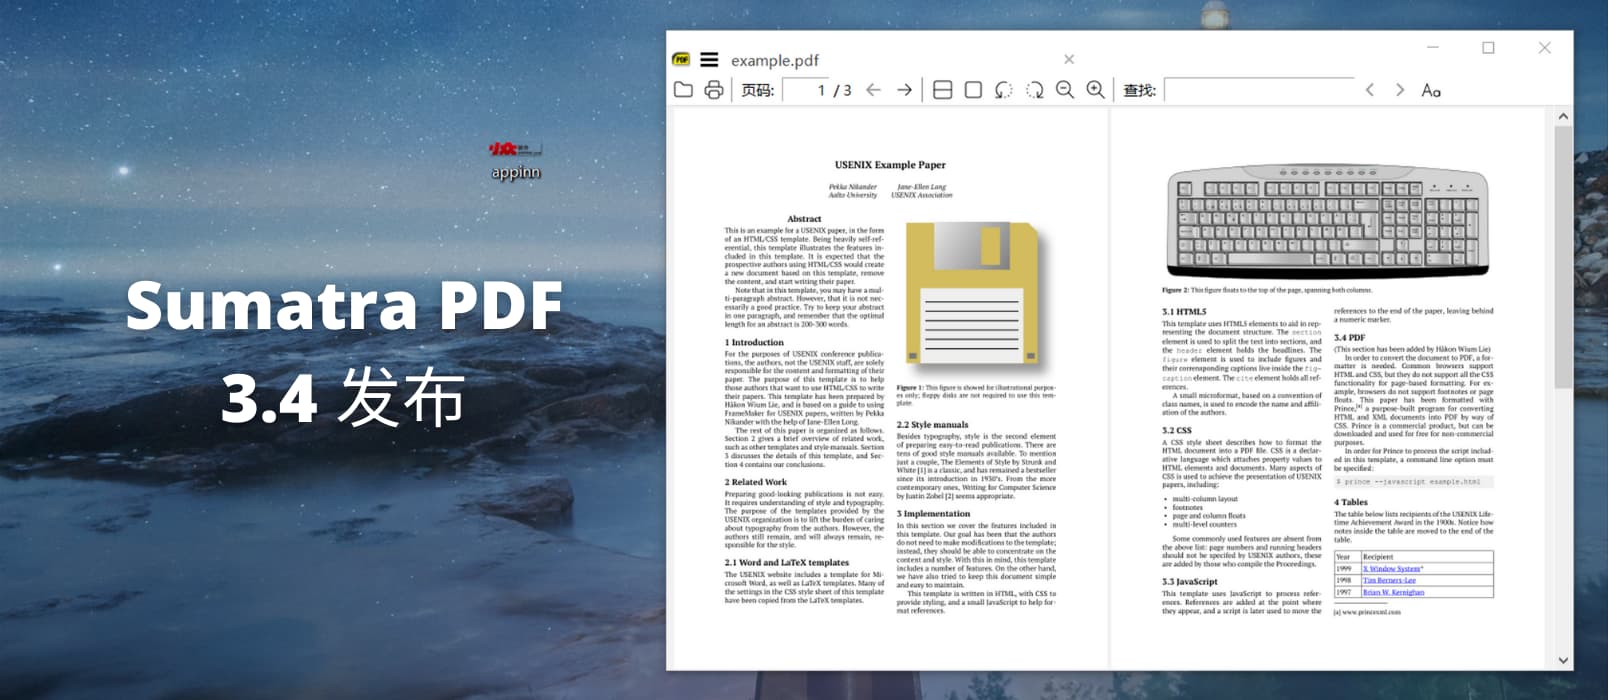 Sumatra PDF 3.4 版本发布，新增命令行、自定义快捷键、mupdf 引擎、网络翻译等功能 1